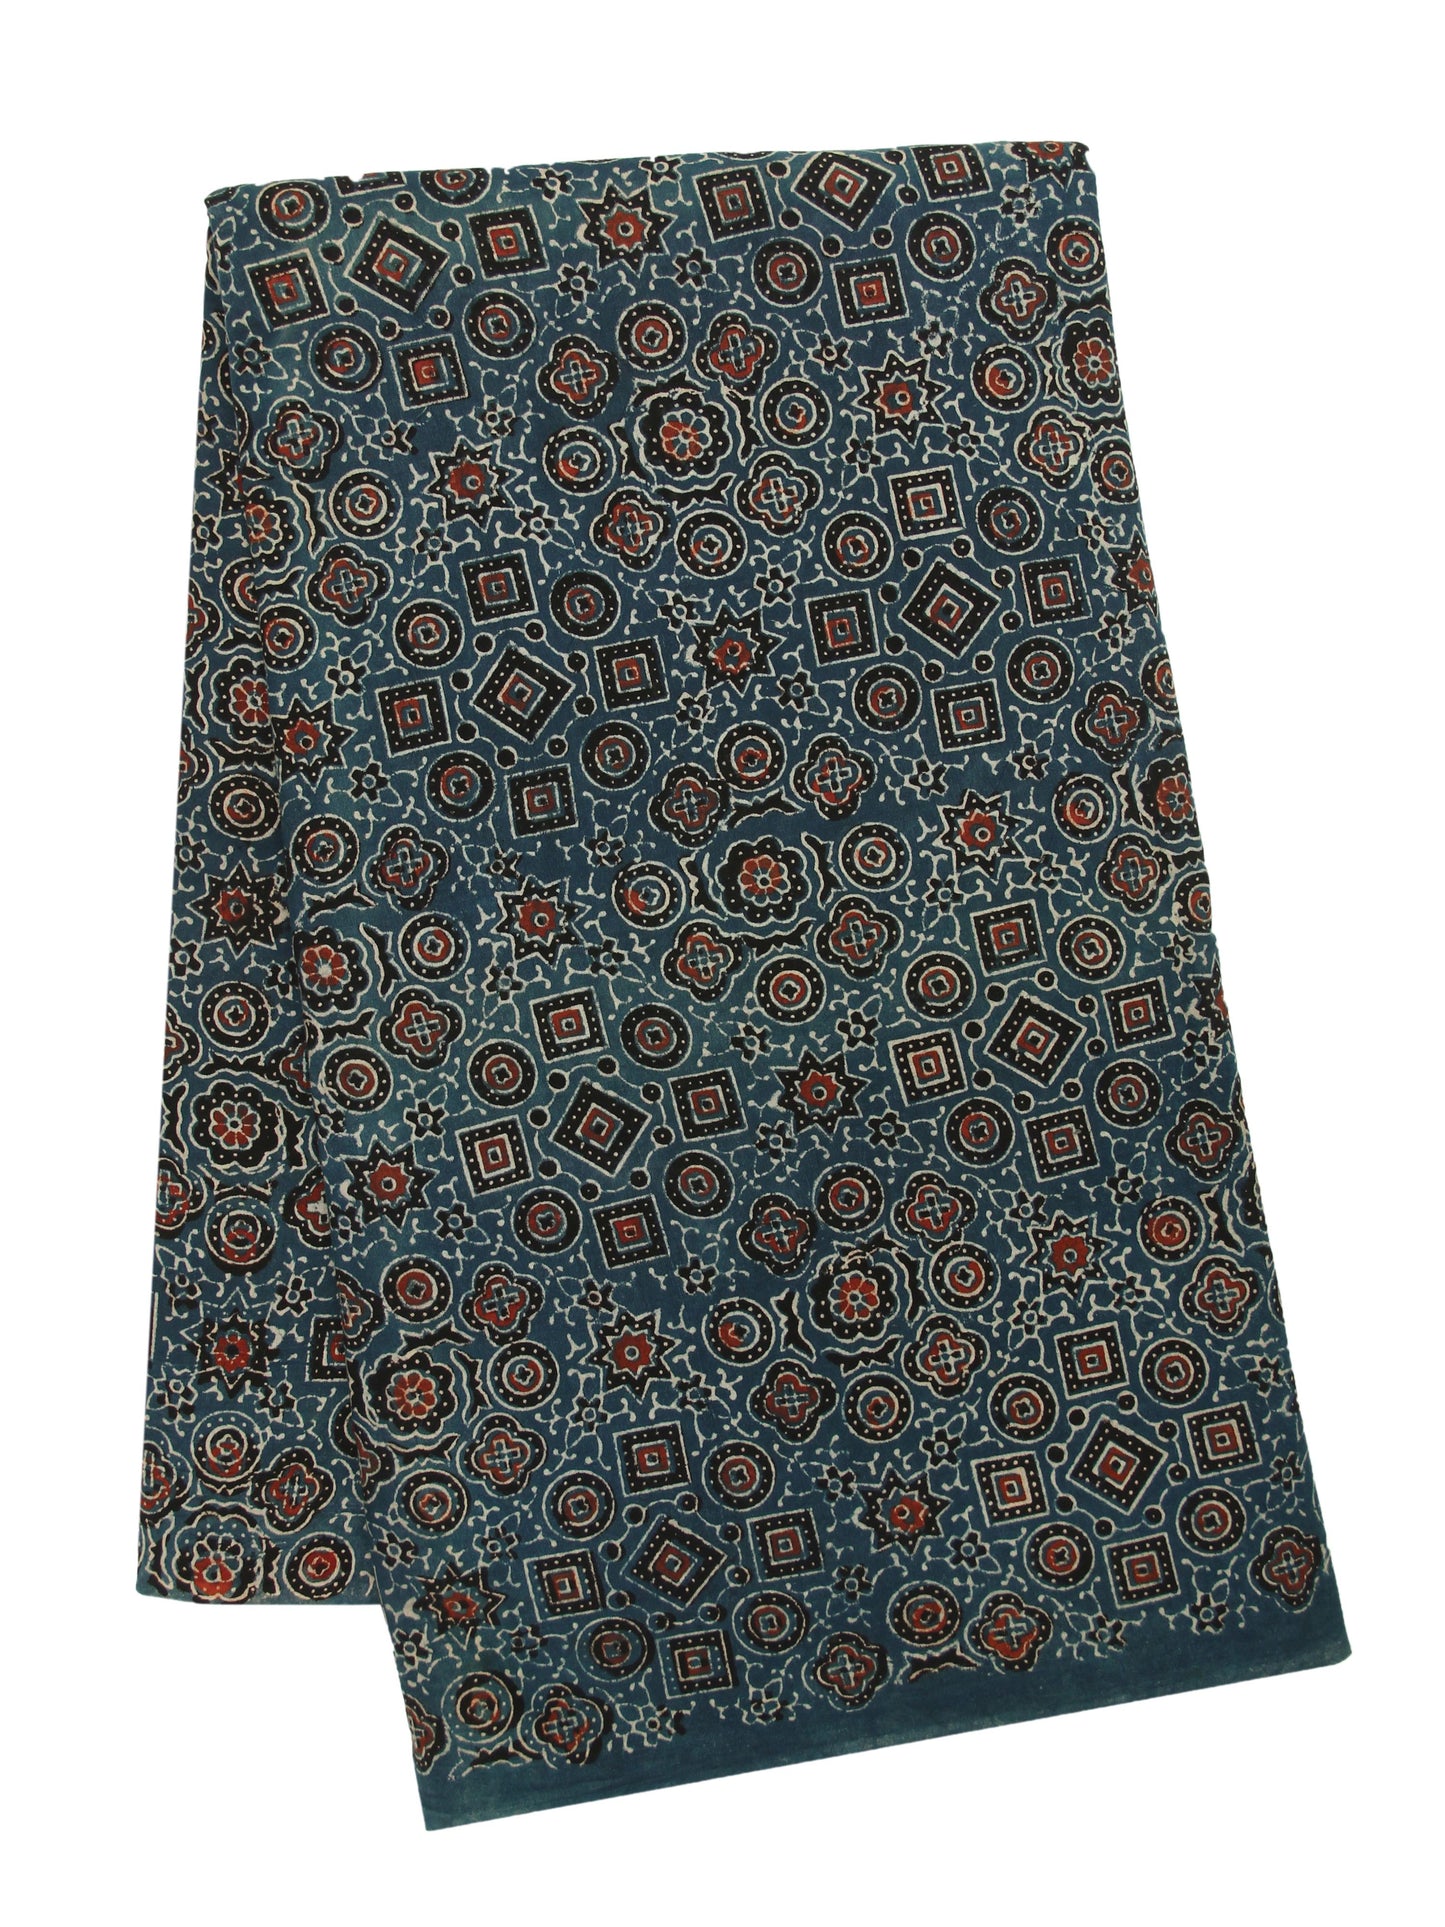 Indigo ajrakh hand block print cotton fabric, Ajrakh prints cotton fabric dyed in indigo color